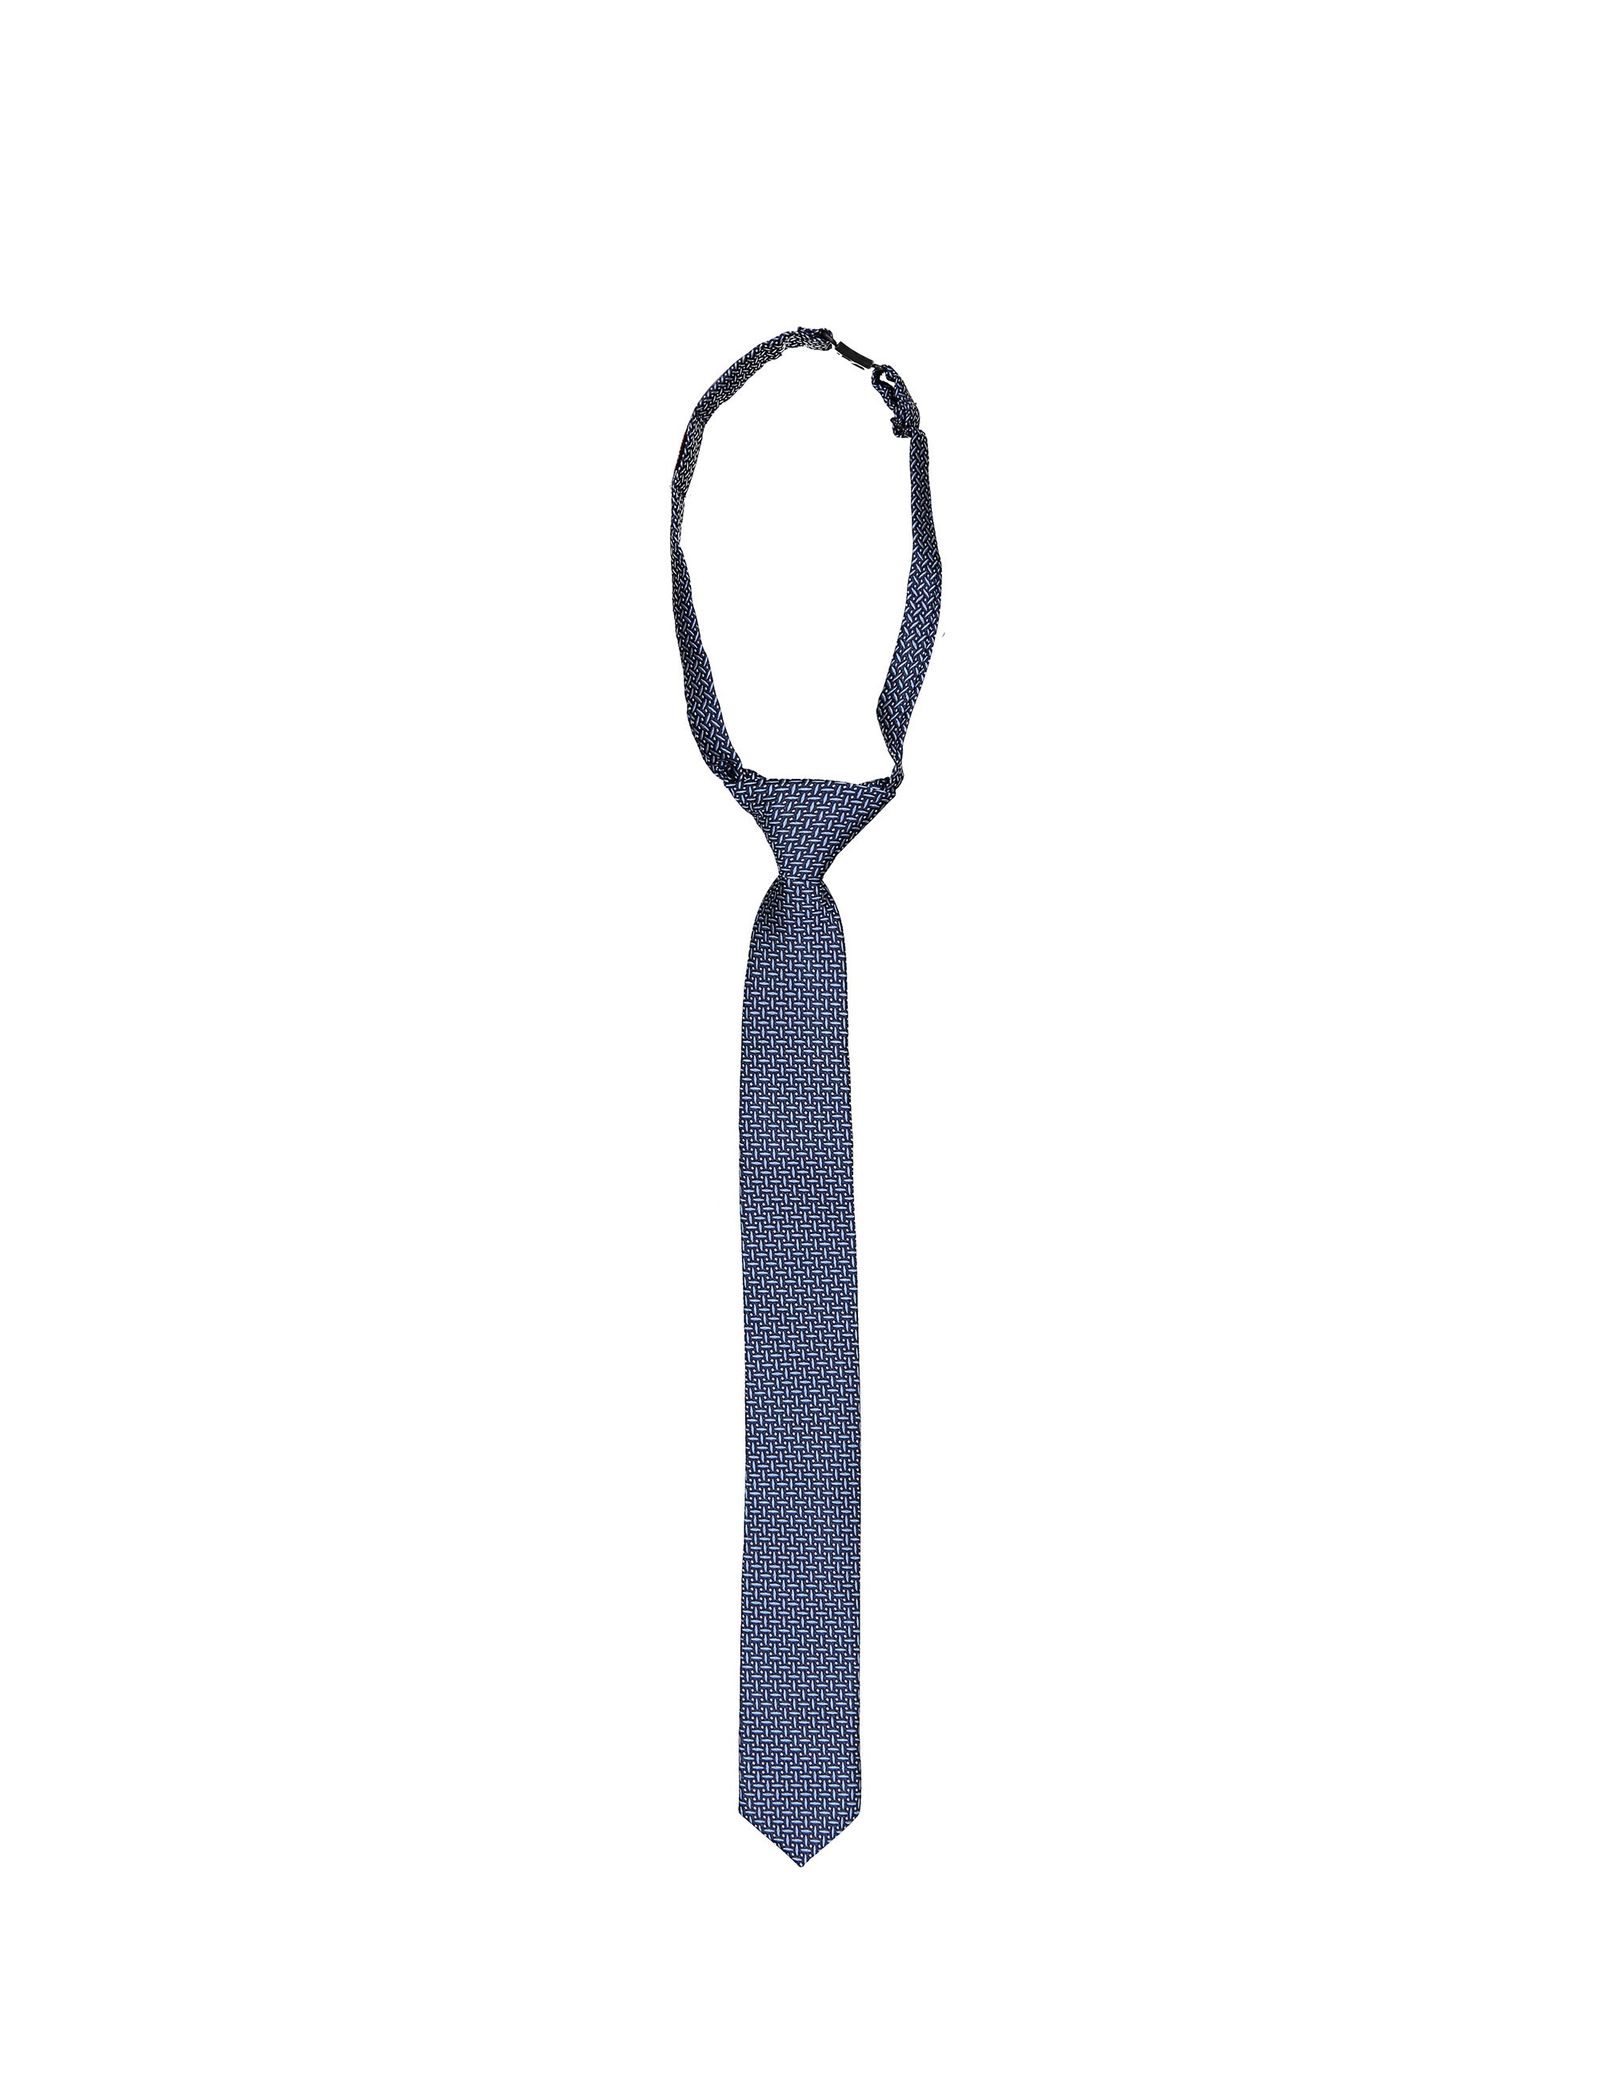 کراوات طرح دار پسرانه - بلوکیدز تک سایز - آبي - 1